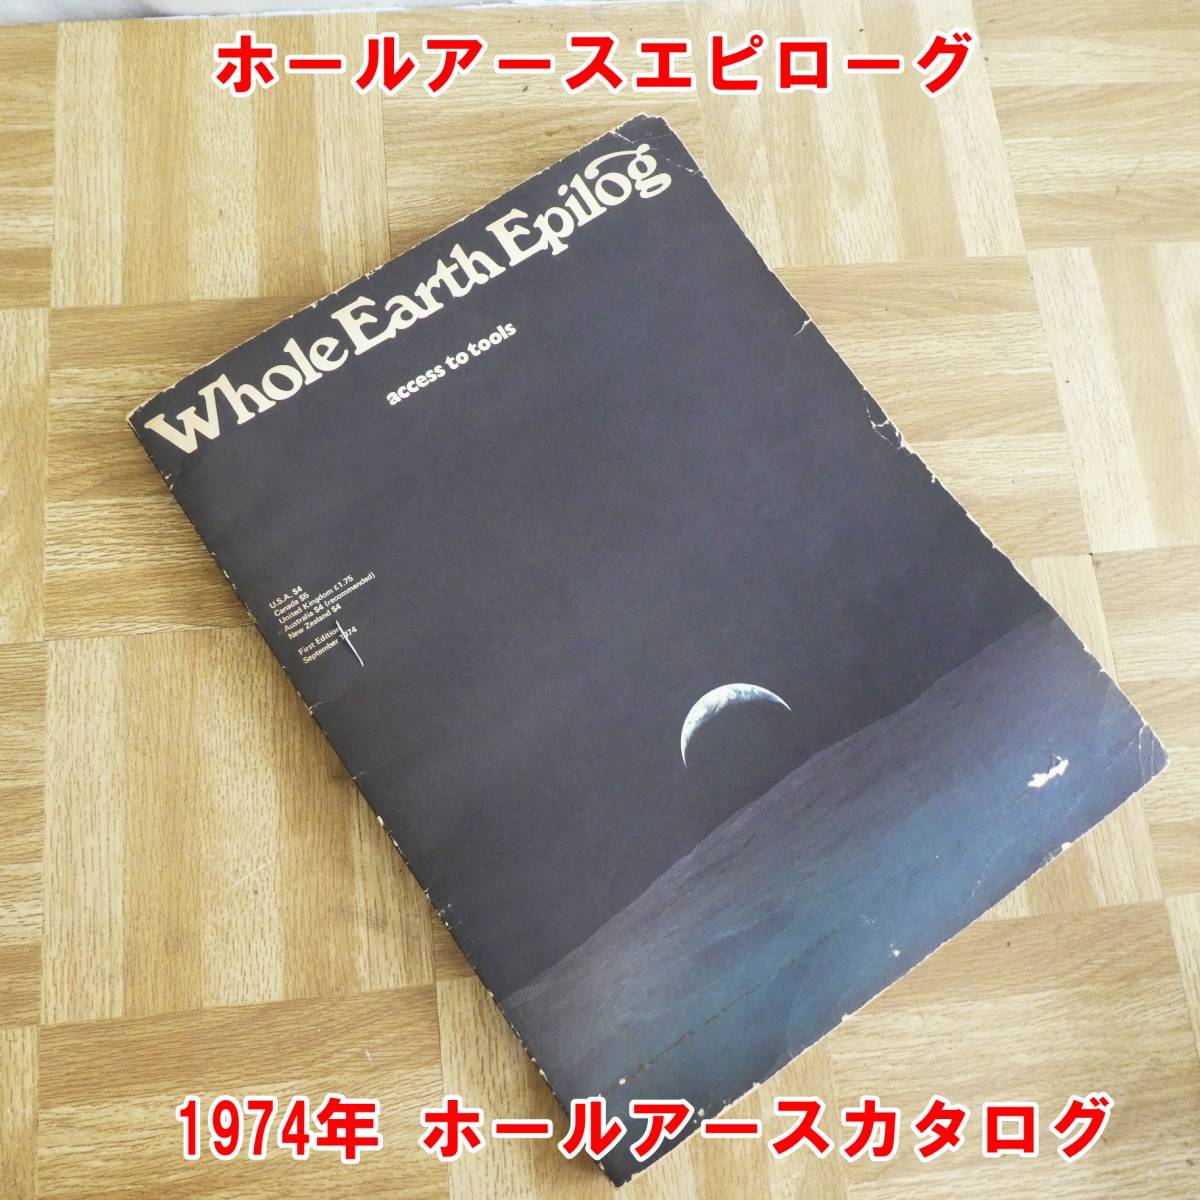 Whole Earth Epilog ホールアースカタログ 1974年出版-